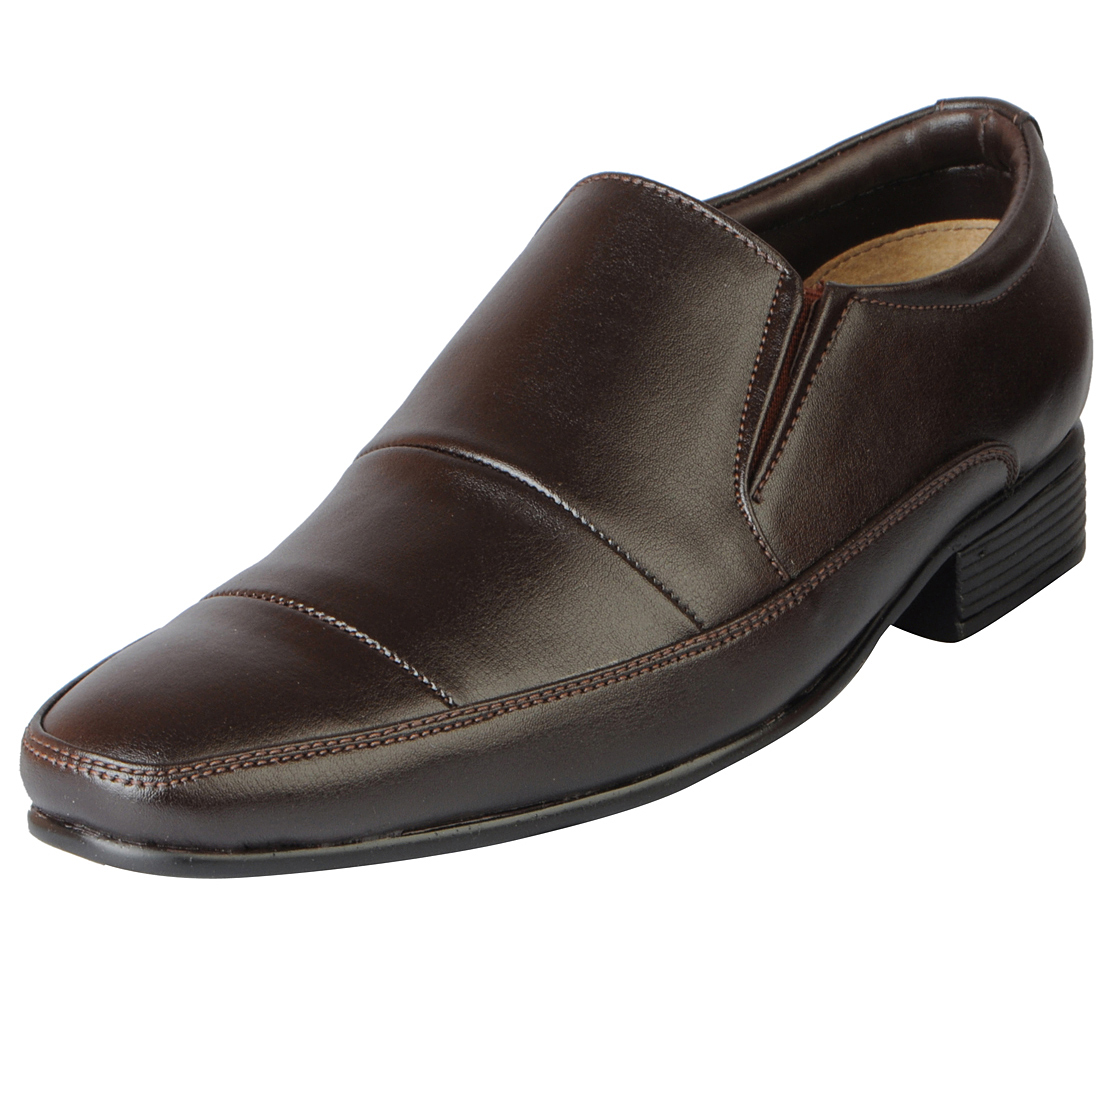 Buy Bata Men's Formal Slip On Shoes Online @ ₹909 from ShopClues